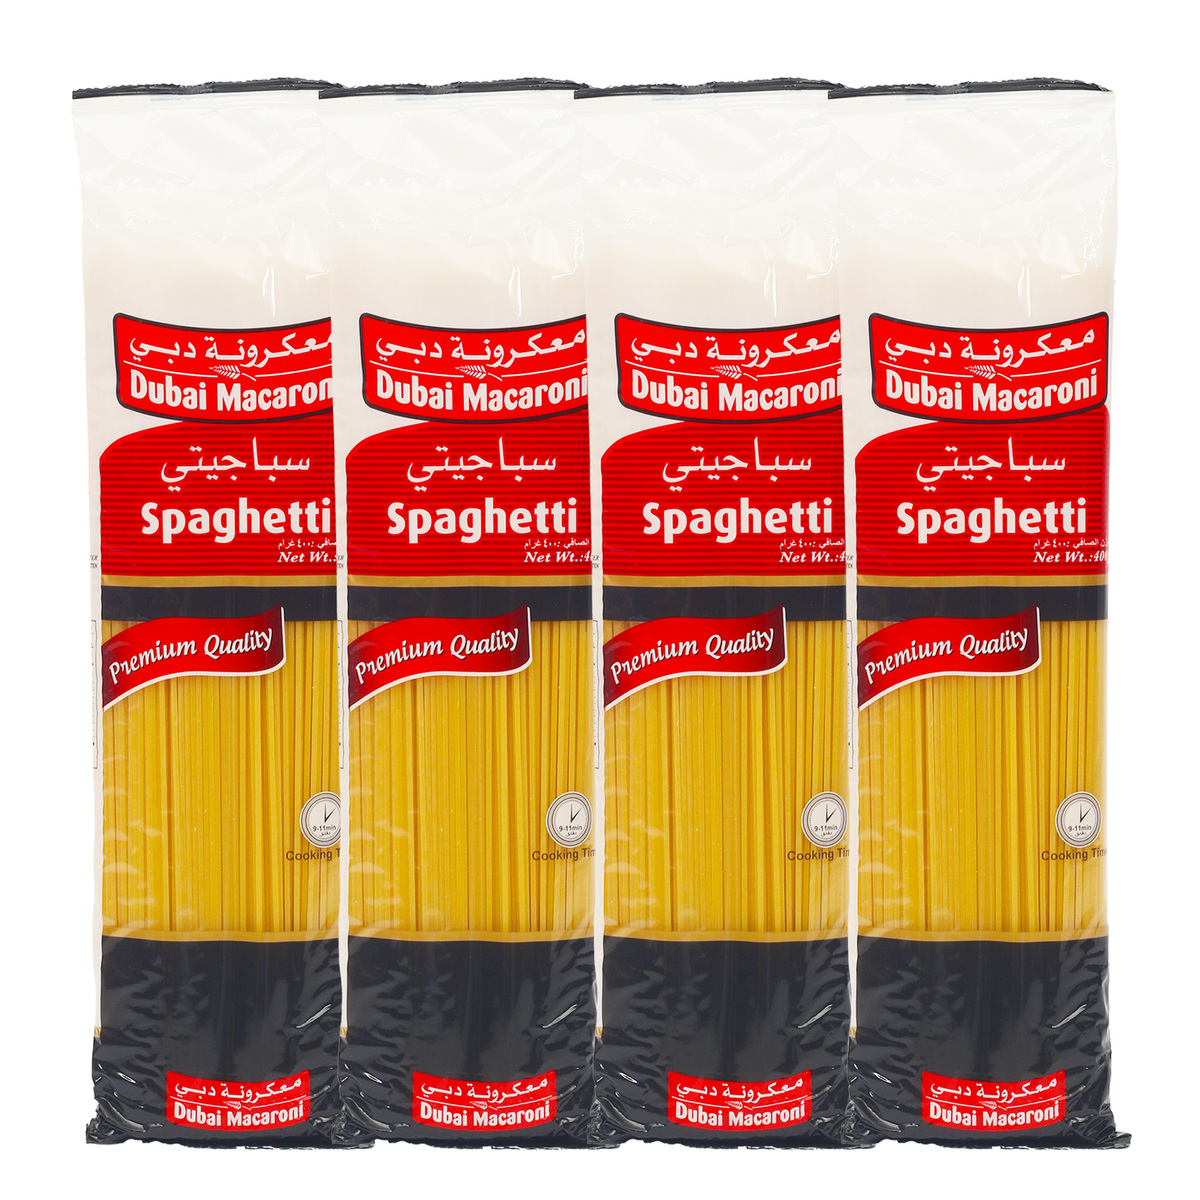 Dubai Macaroni Spaghetti Pasta Value Pack 4 x 400 g